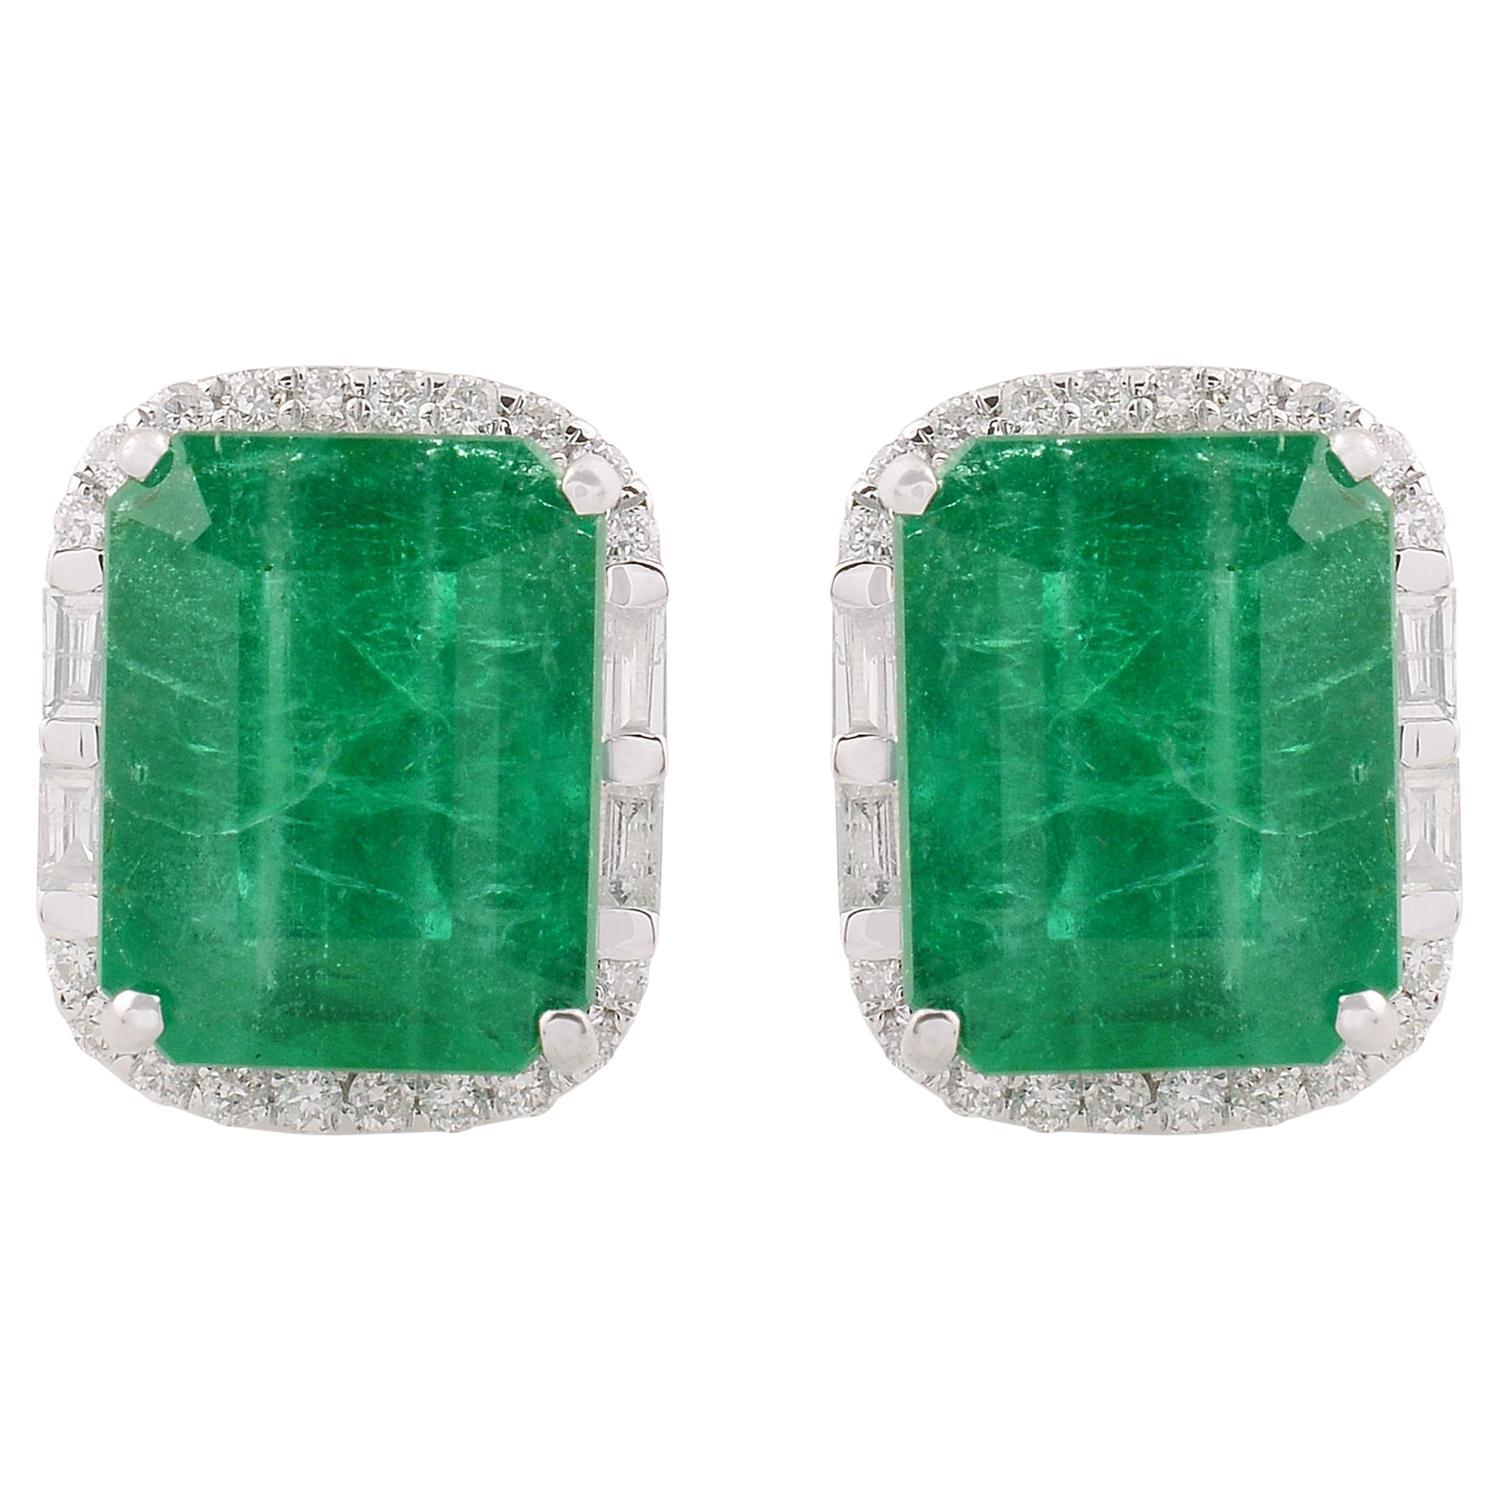 Zambian Emerald Stud Earrings SI Clarity HI Color Diamond 14k White Gold Jewelry